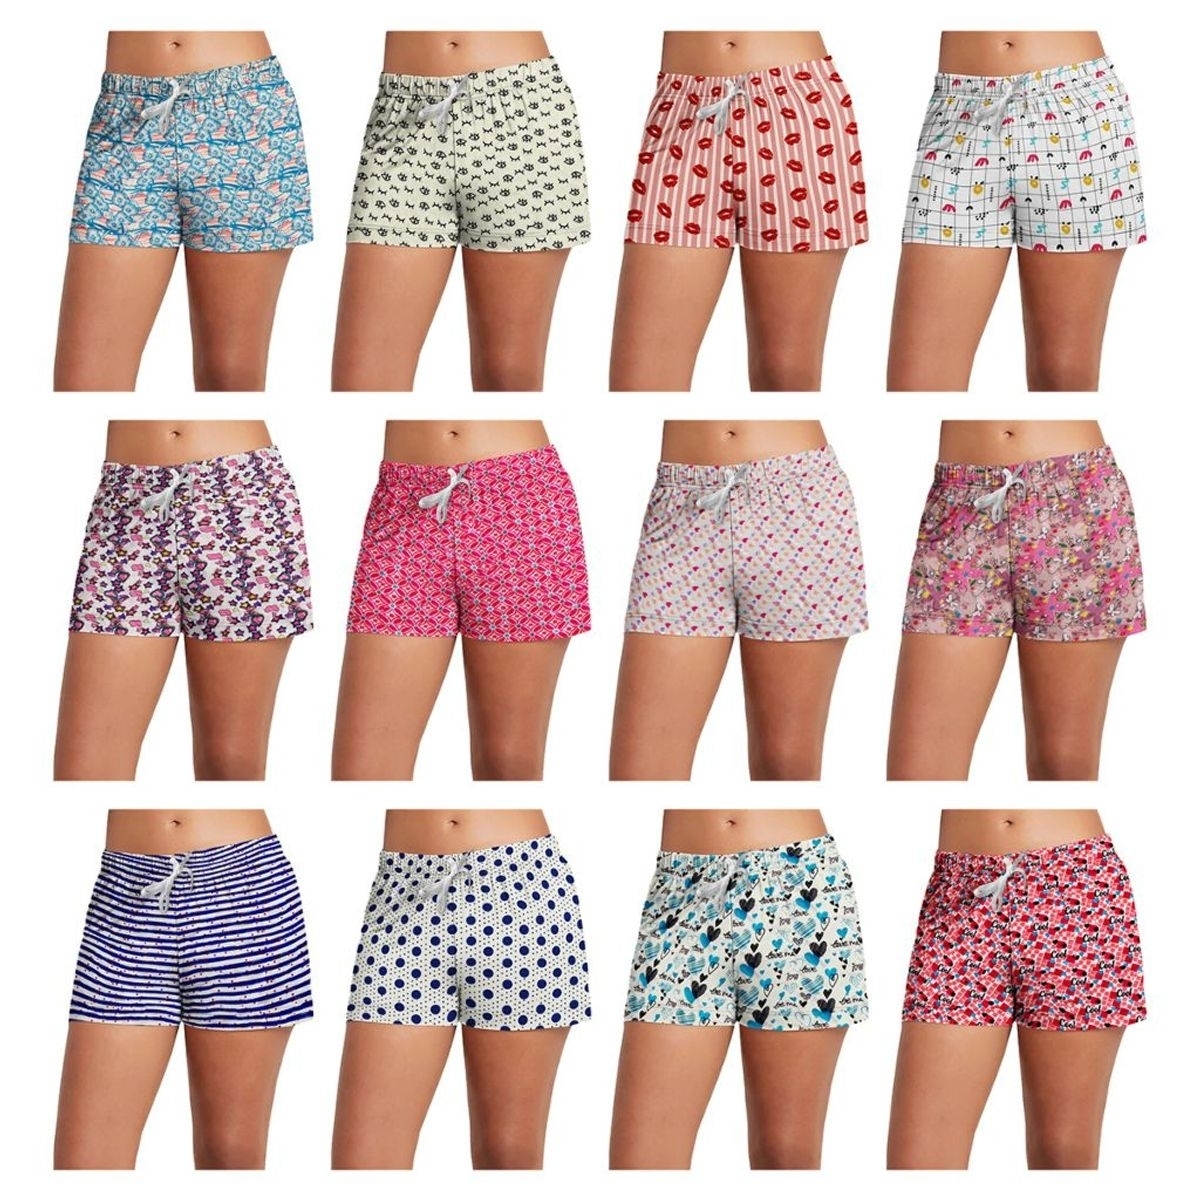 5-Pack: Women's Super-Soft Lightweight Fun Printed Comfy Lounge Bottom Pajama Shorts W/ Drawstring - Medium, Love